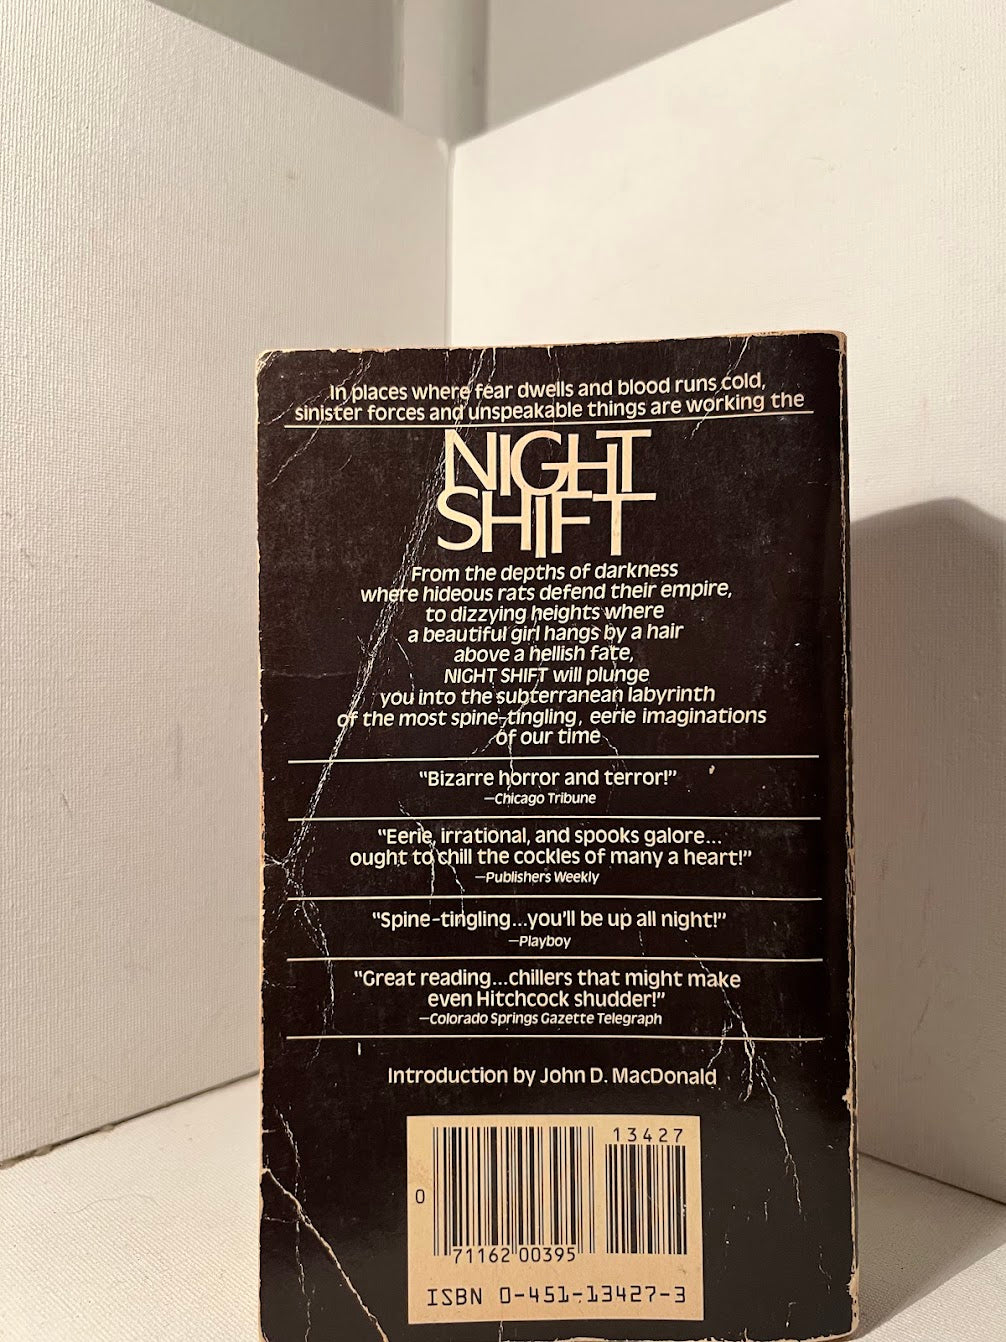 Night Shift by Stephen King